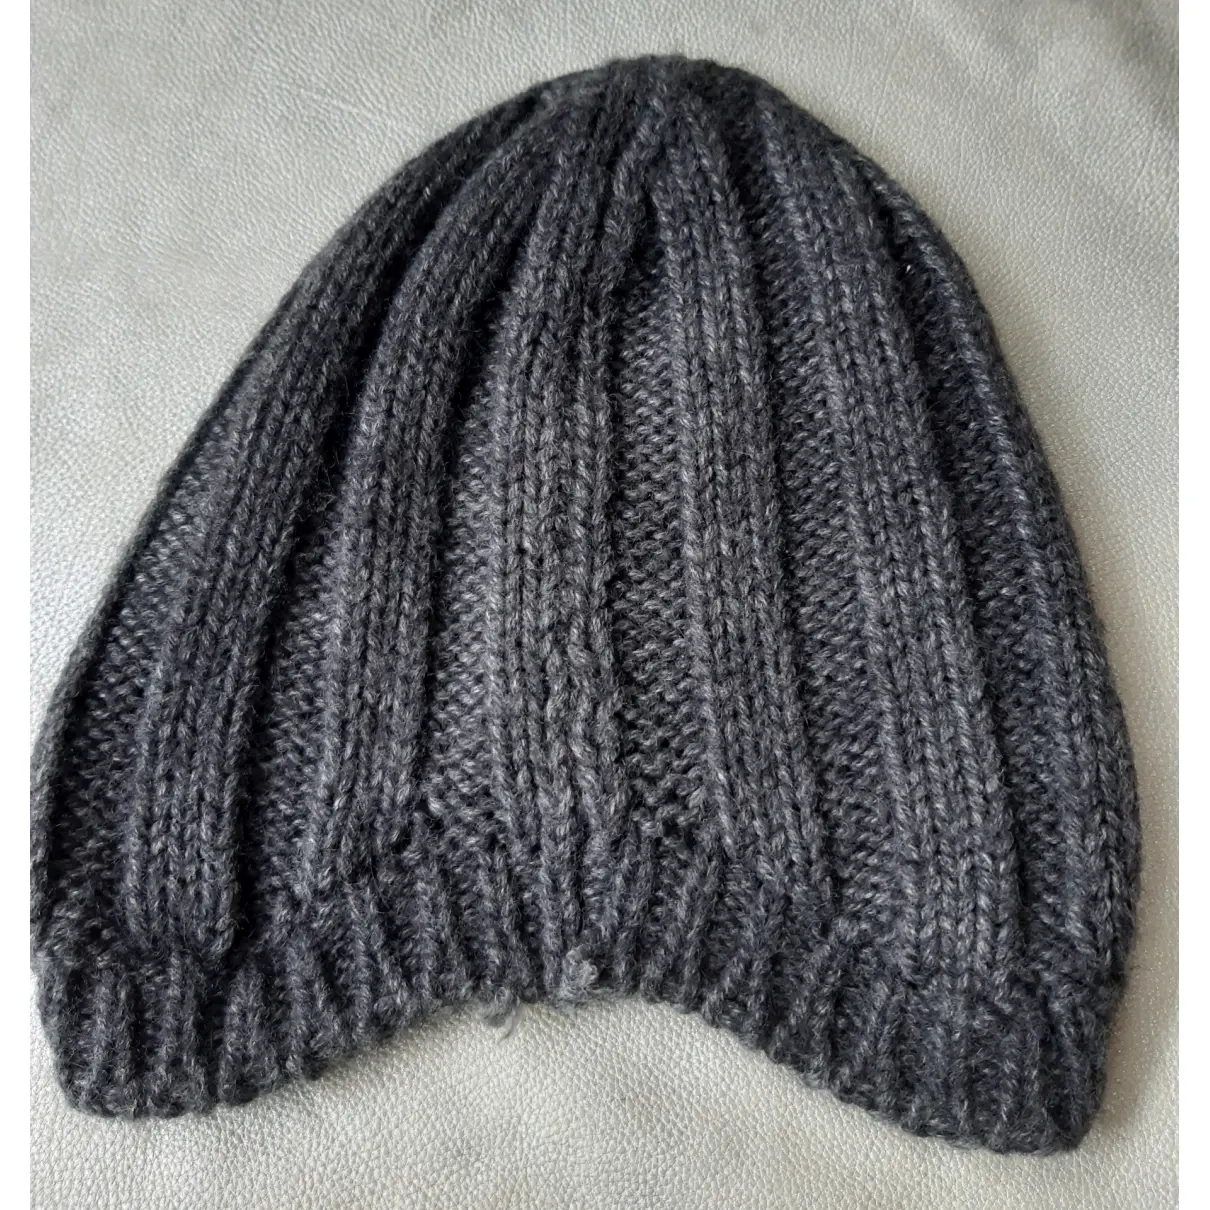 Buy Emporio Armani Wool hat online